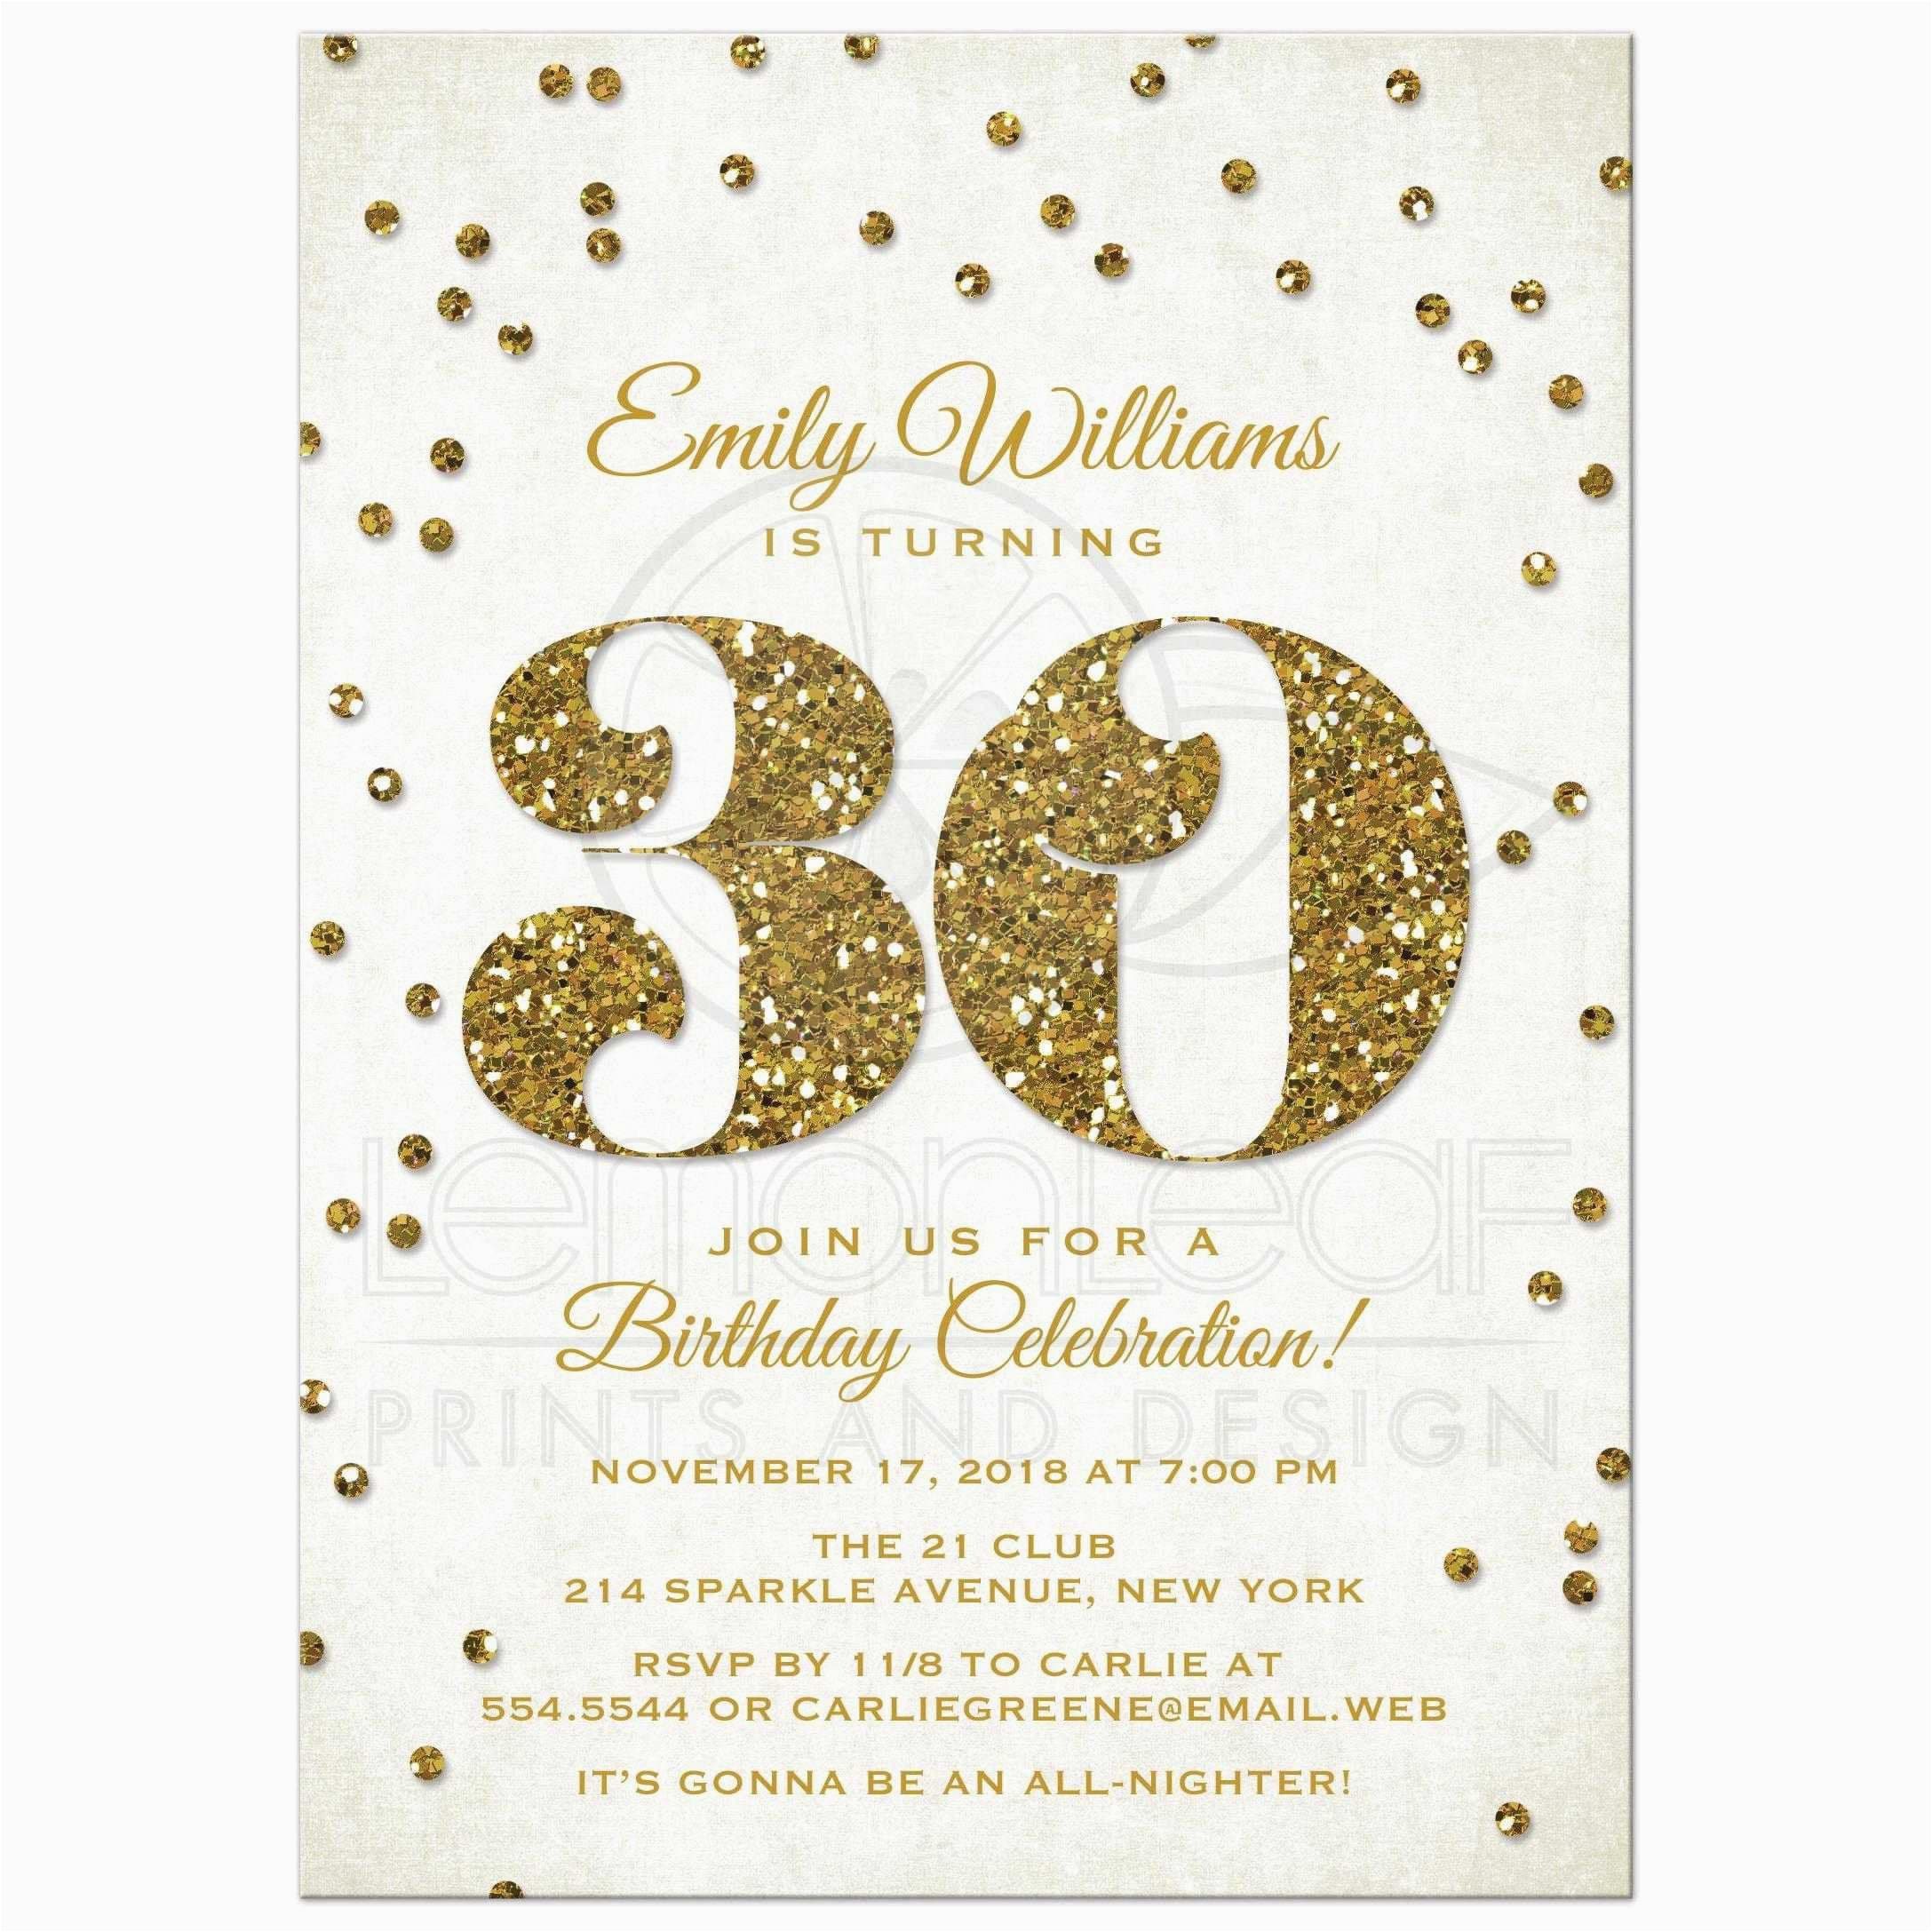 E Invites for Birthday Party 30th Birthday Invitations Templates Free ...